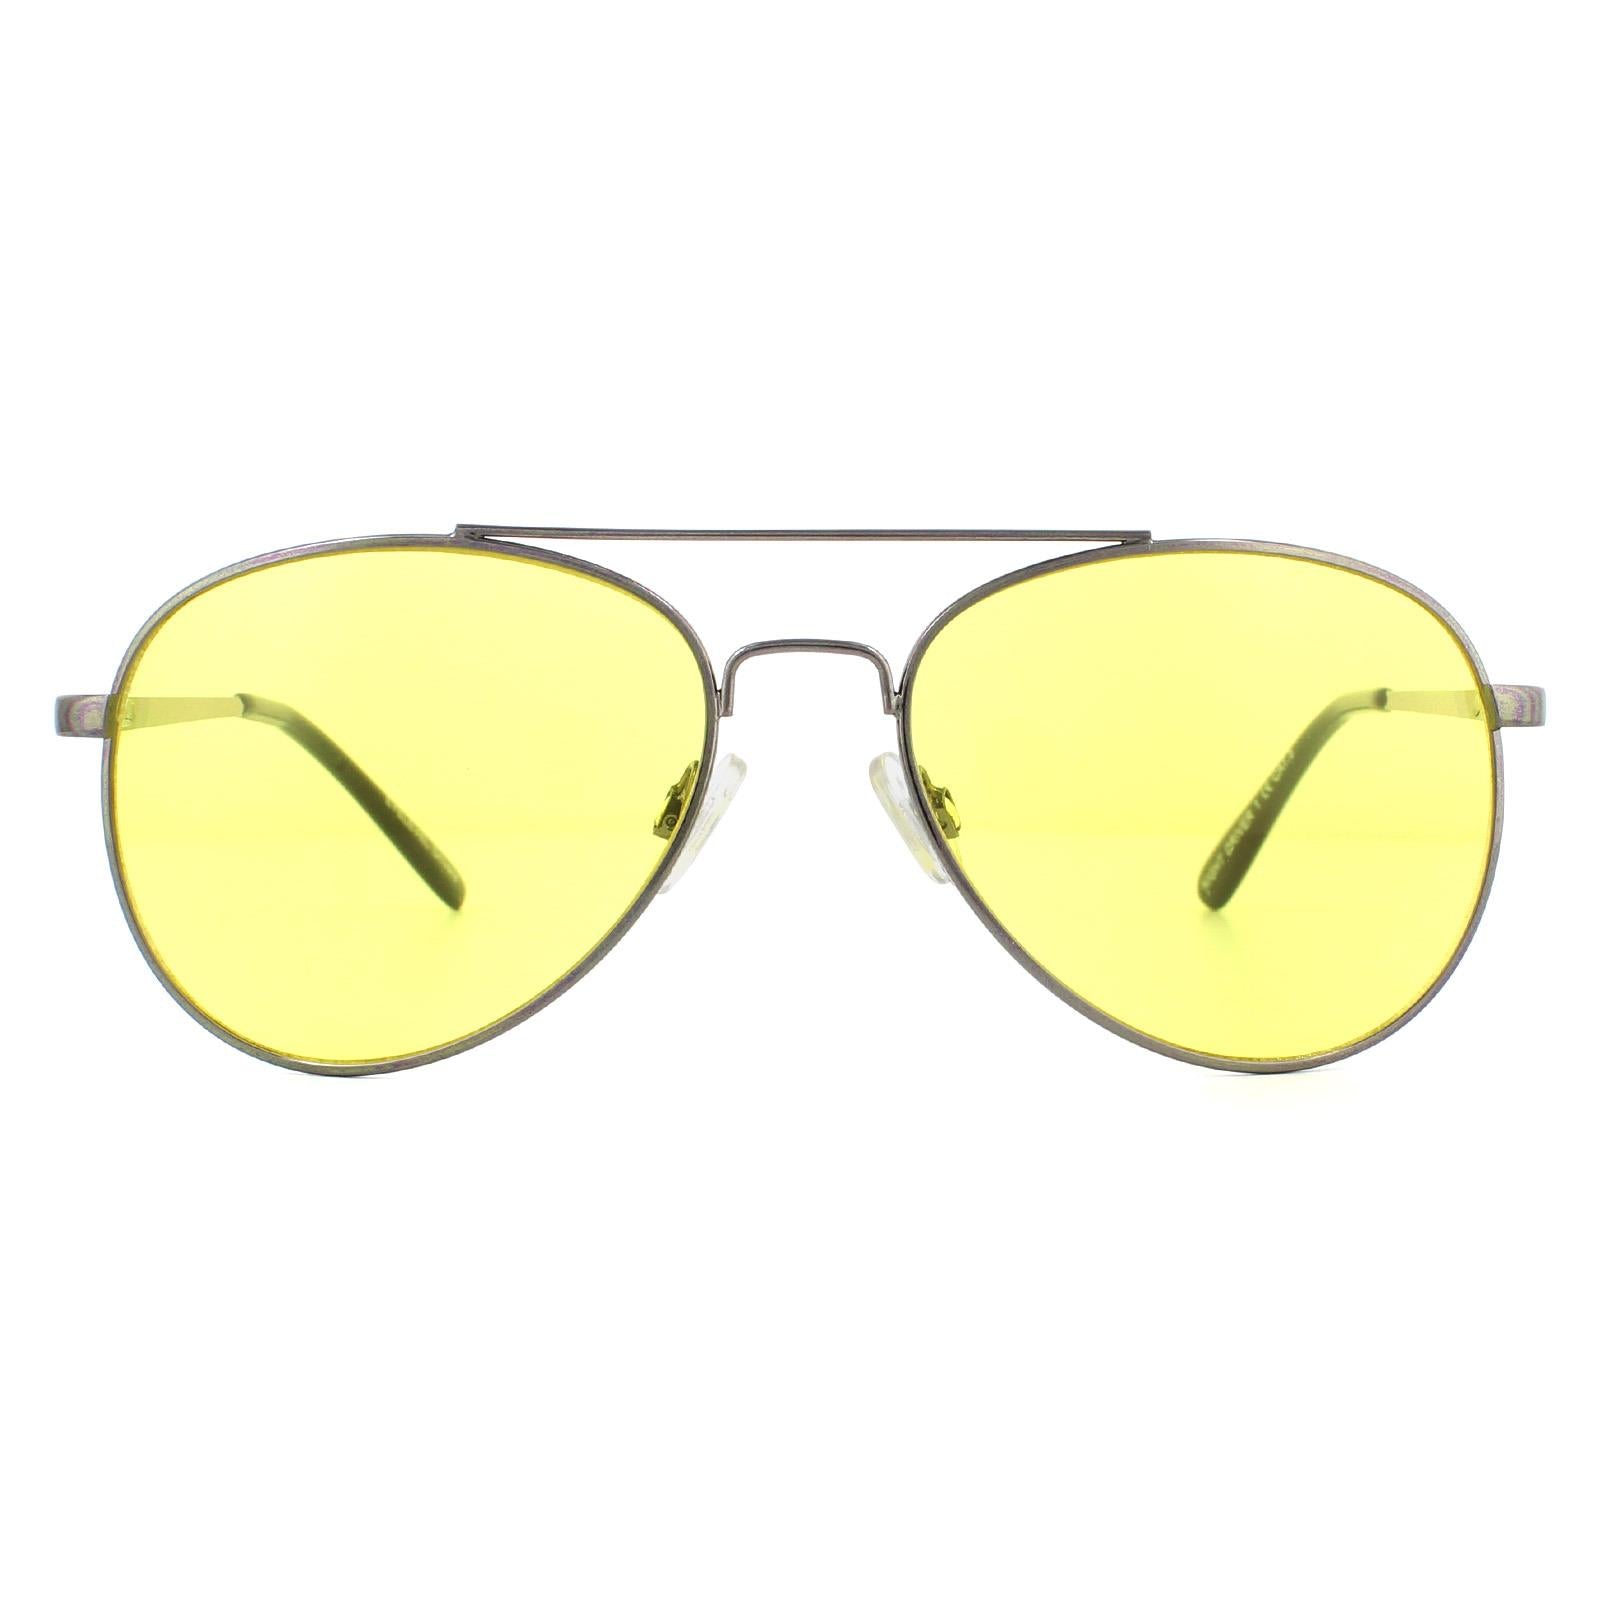 Shop Eyelevel Sunglasses – Discounted Sunglasses